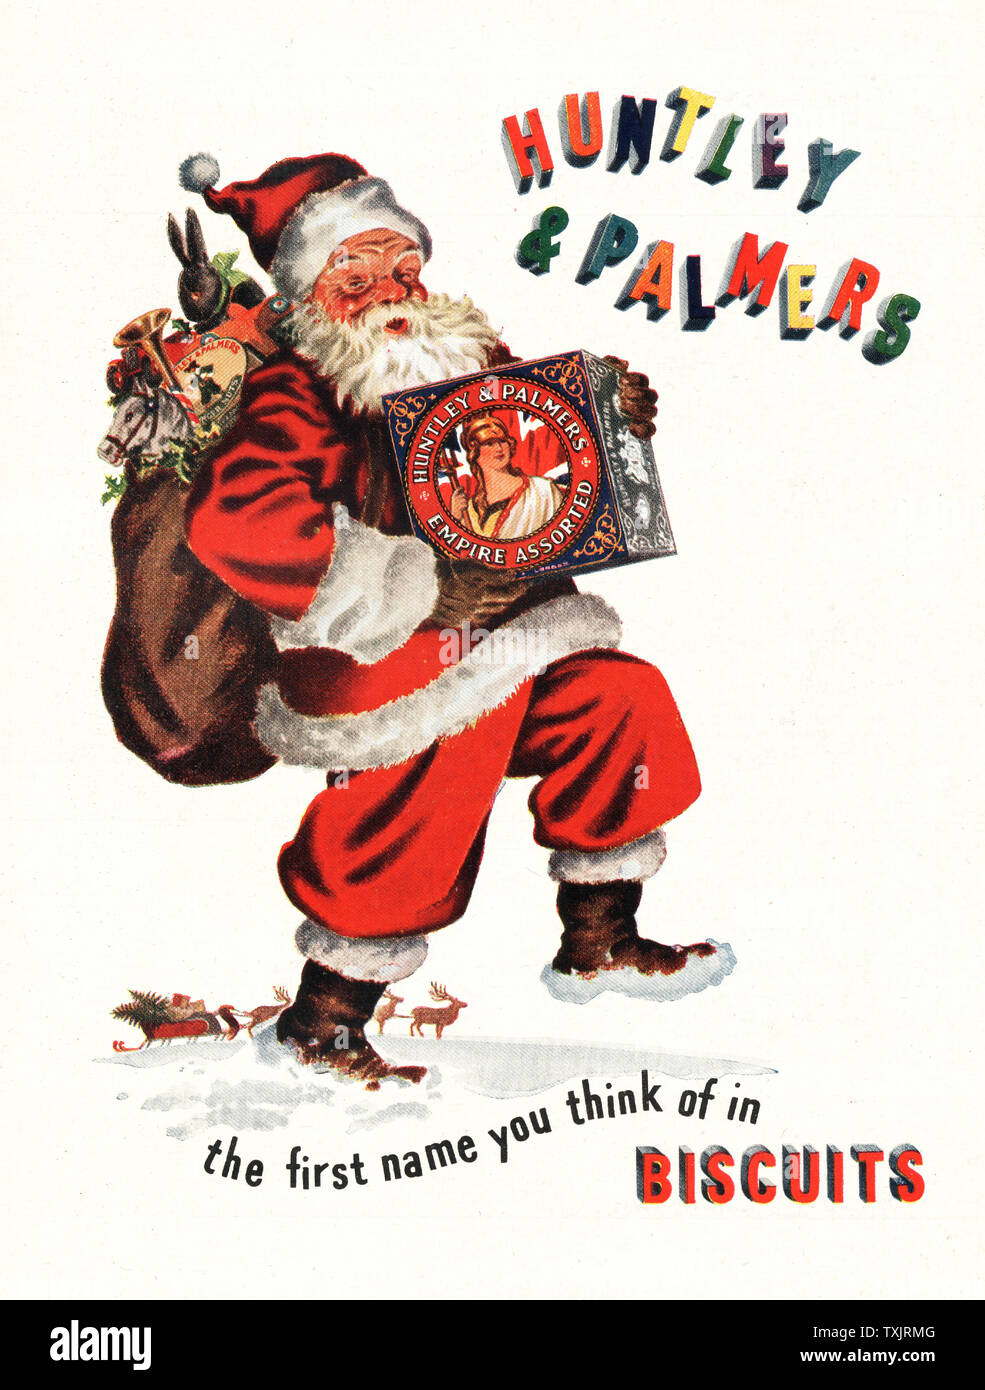 1945 UK Magazine Huntley & Palmers Biscuits Advert Stock Photo